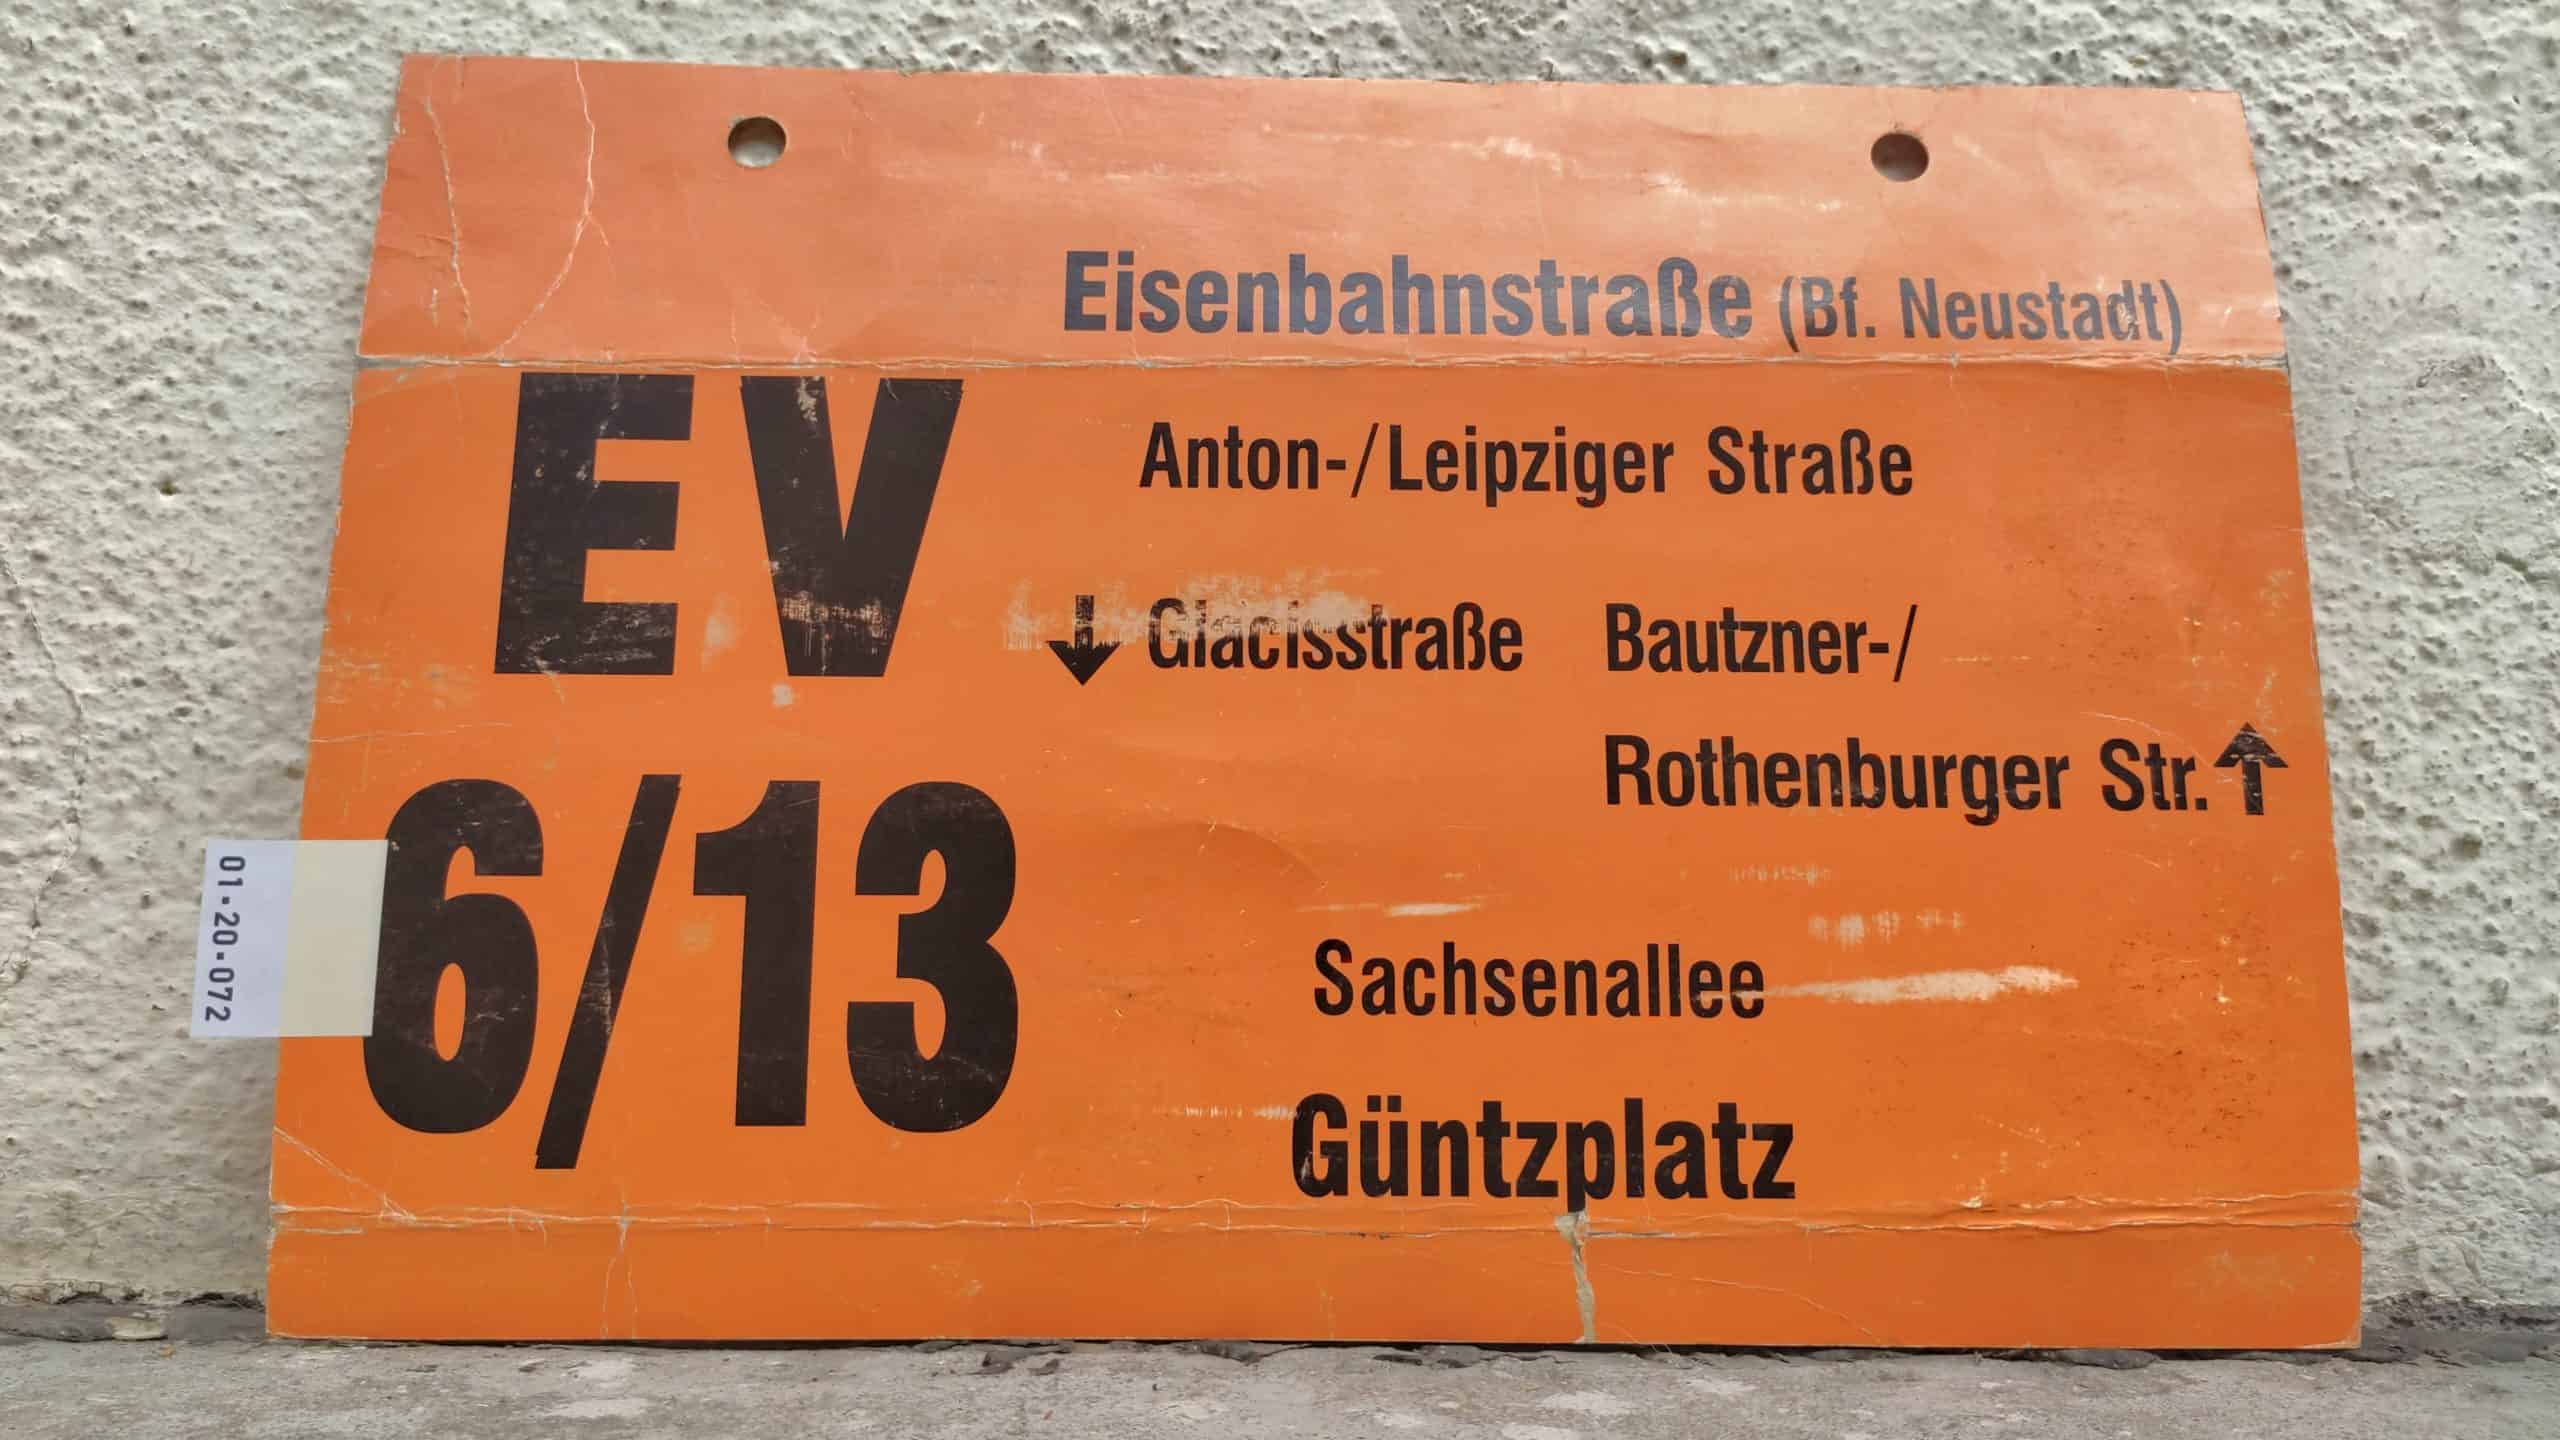 EV 6/13 Eisenbahnstraße (Bf. Neustadt) – Güntzplatz